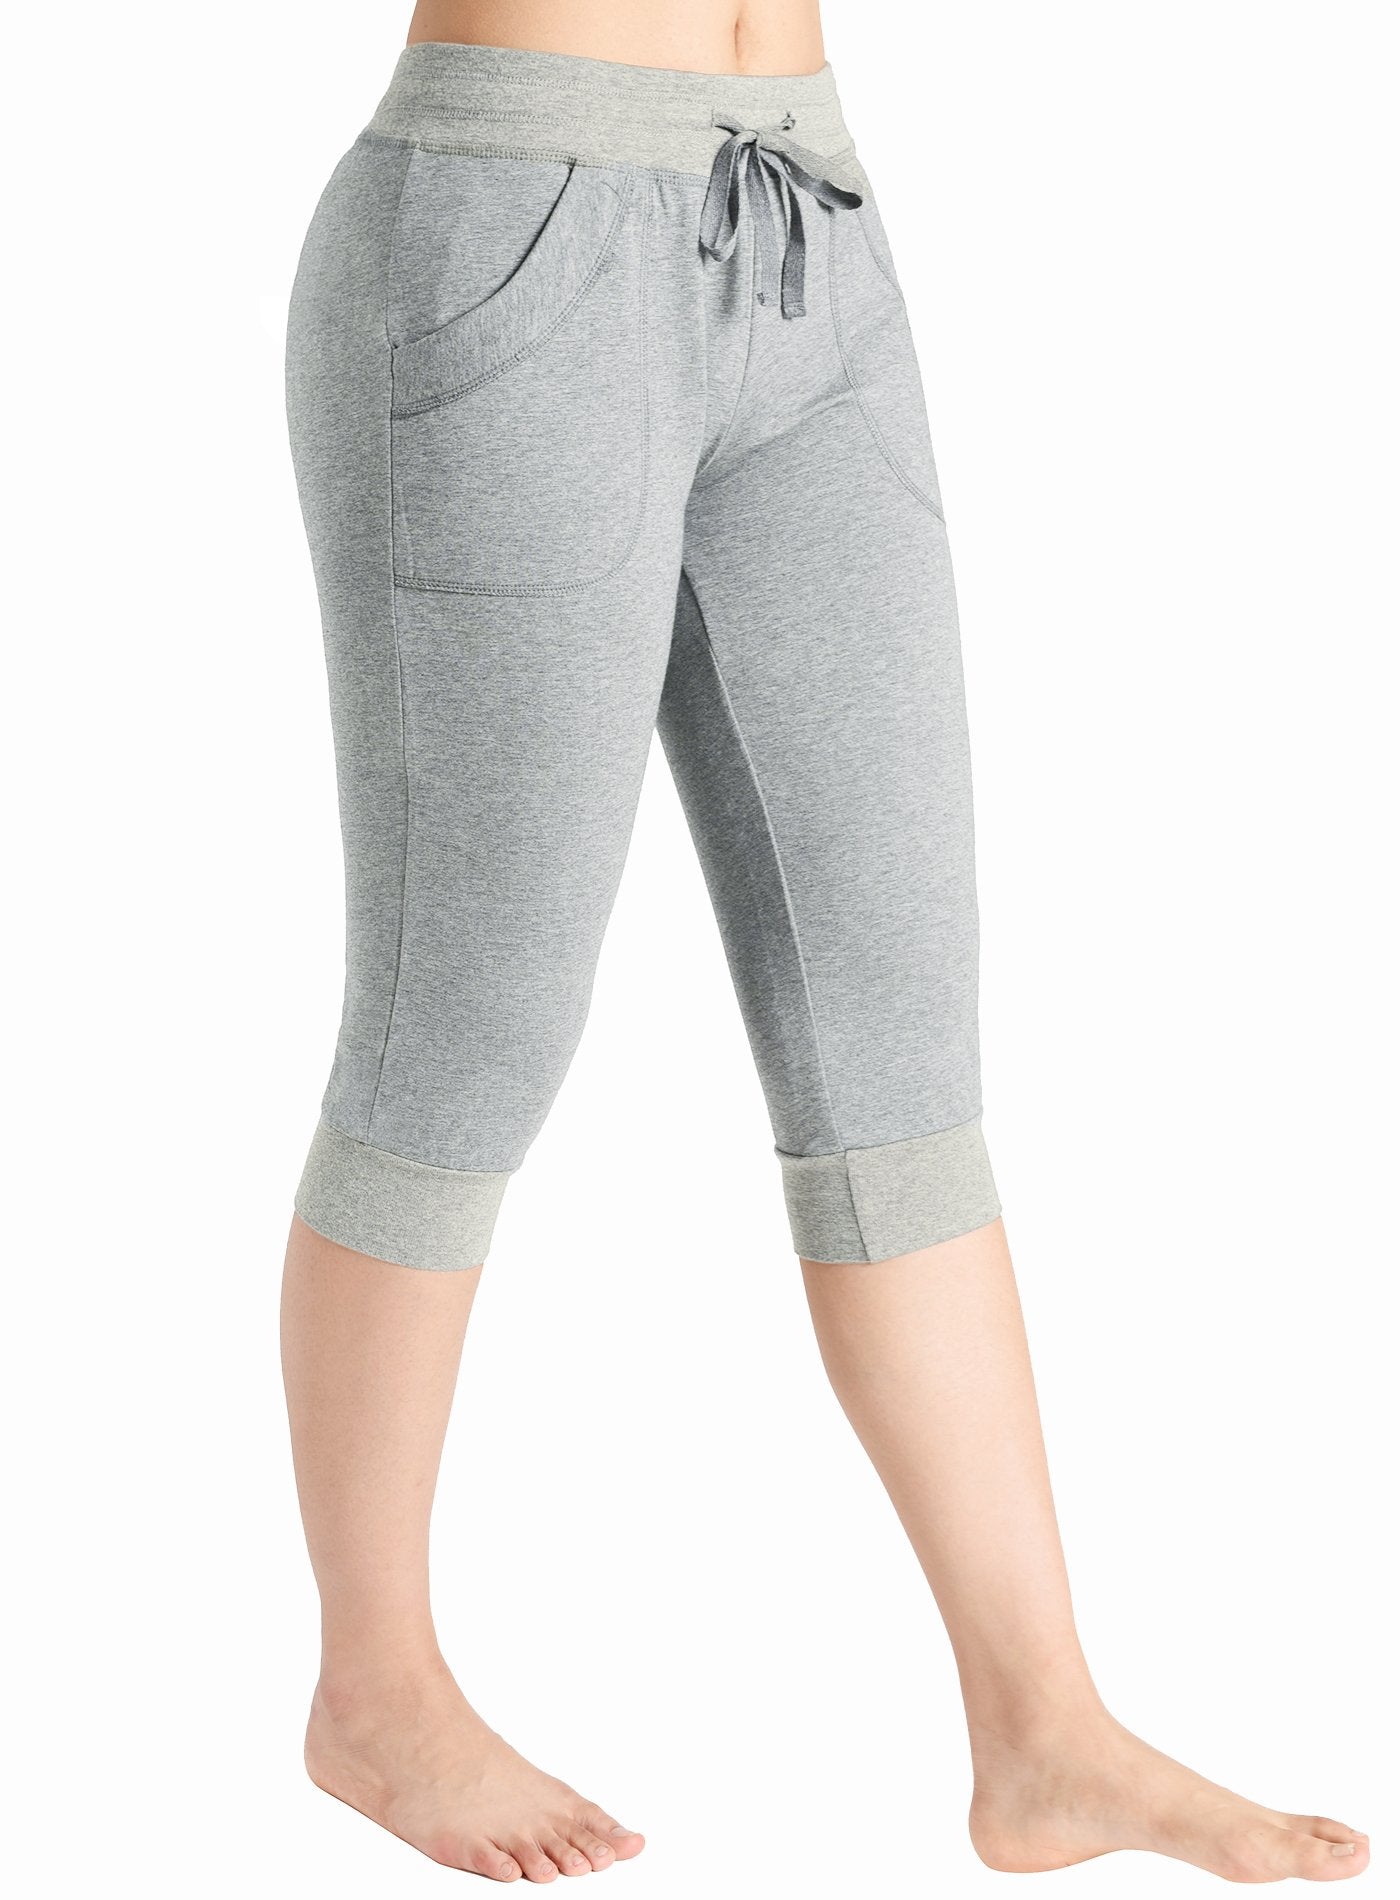 Latuza Women's Cotton Sweatpants Jersey Capri Pants with Pockets